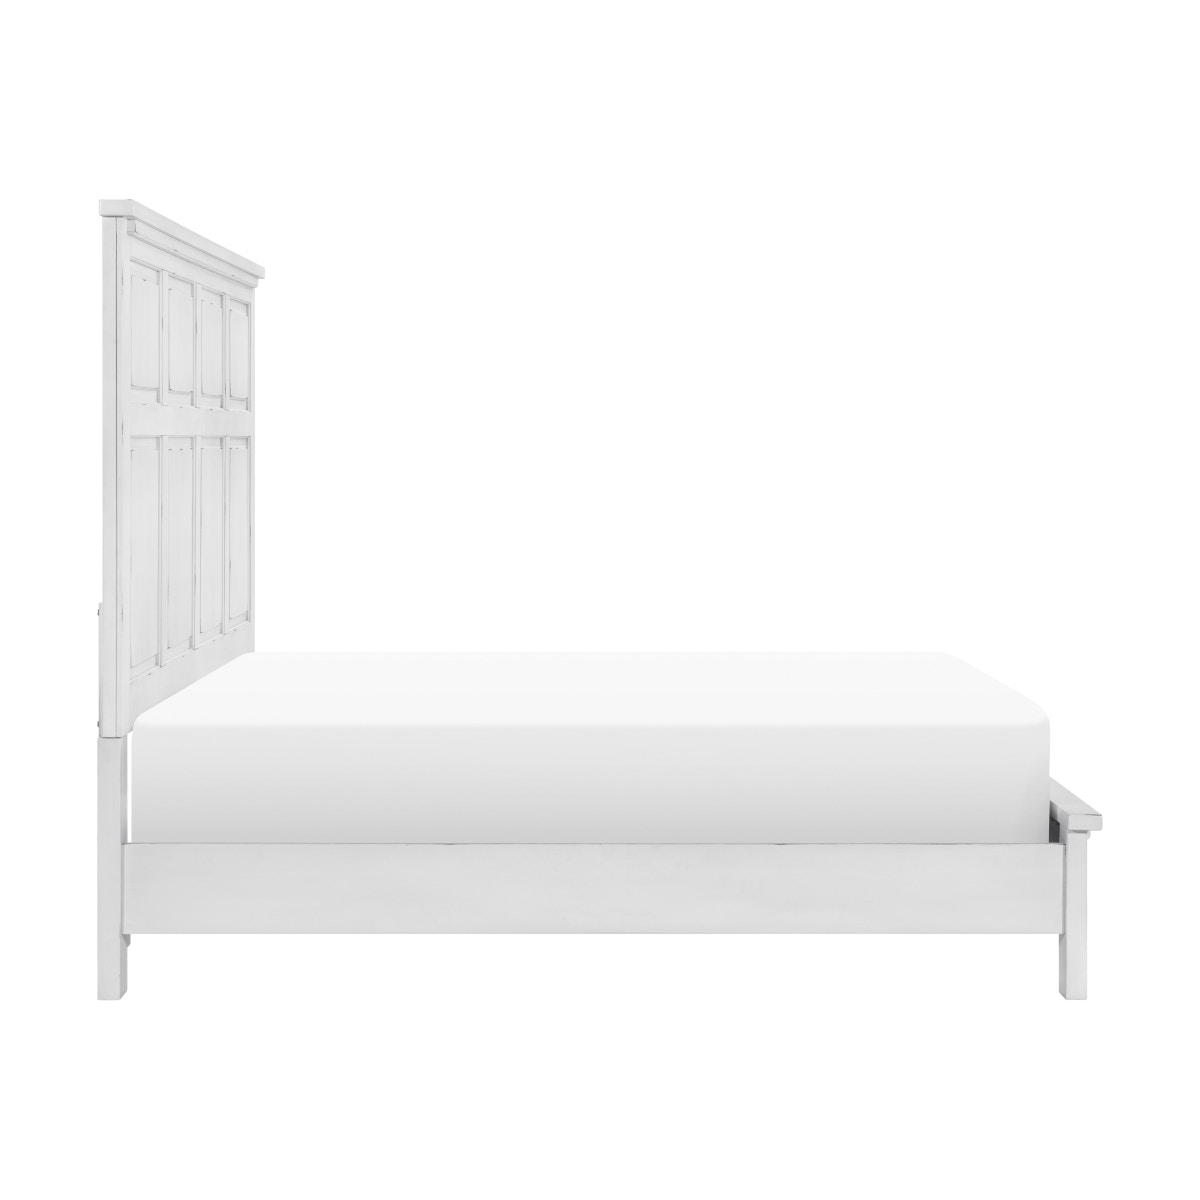 Homelegance Bedroom Queen Headboard 1447-1 - Furniture Plus Inc. - Mesa